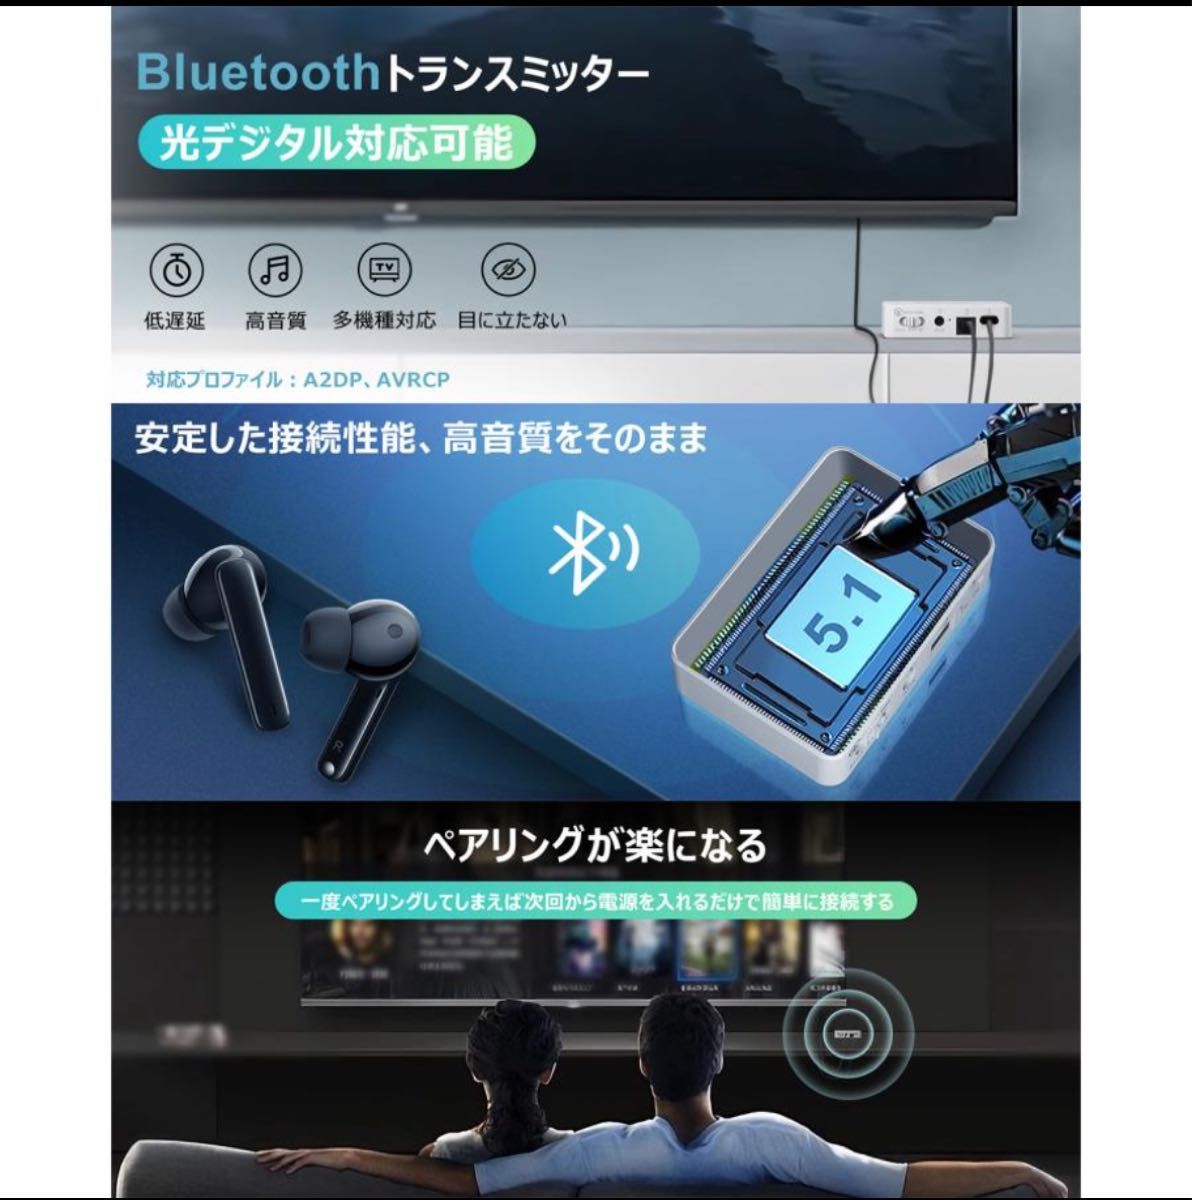 Bluetooth トランスミッター 【光デジタル対応】送信機 Bluetooth 5.1 光デジタルケーブル付き テレビ対応